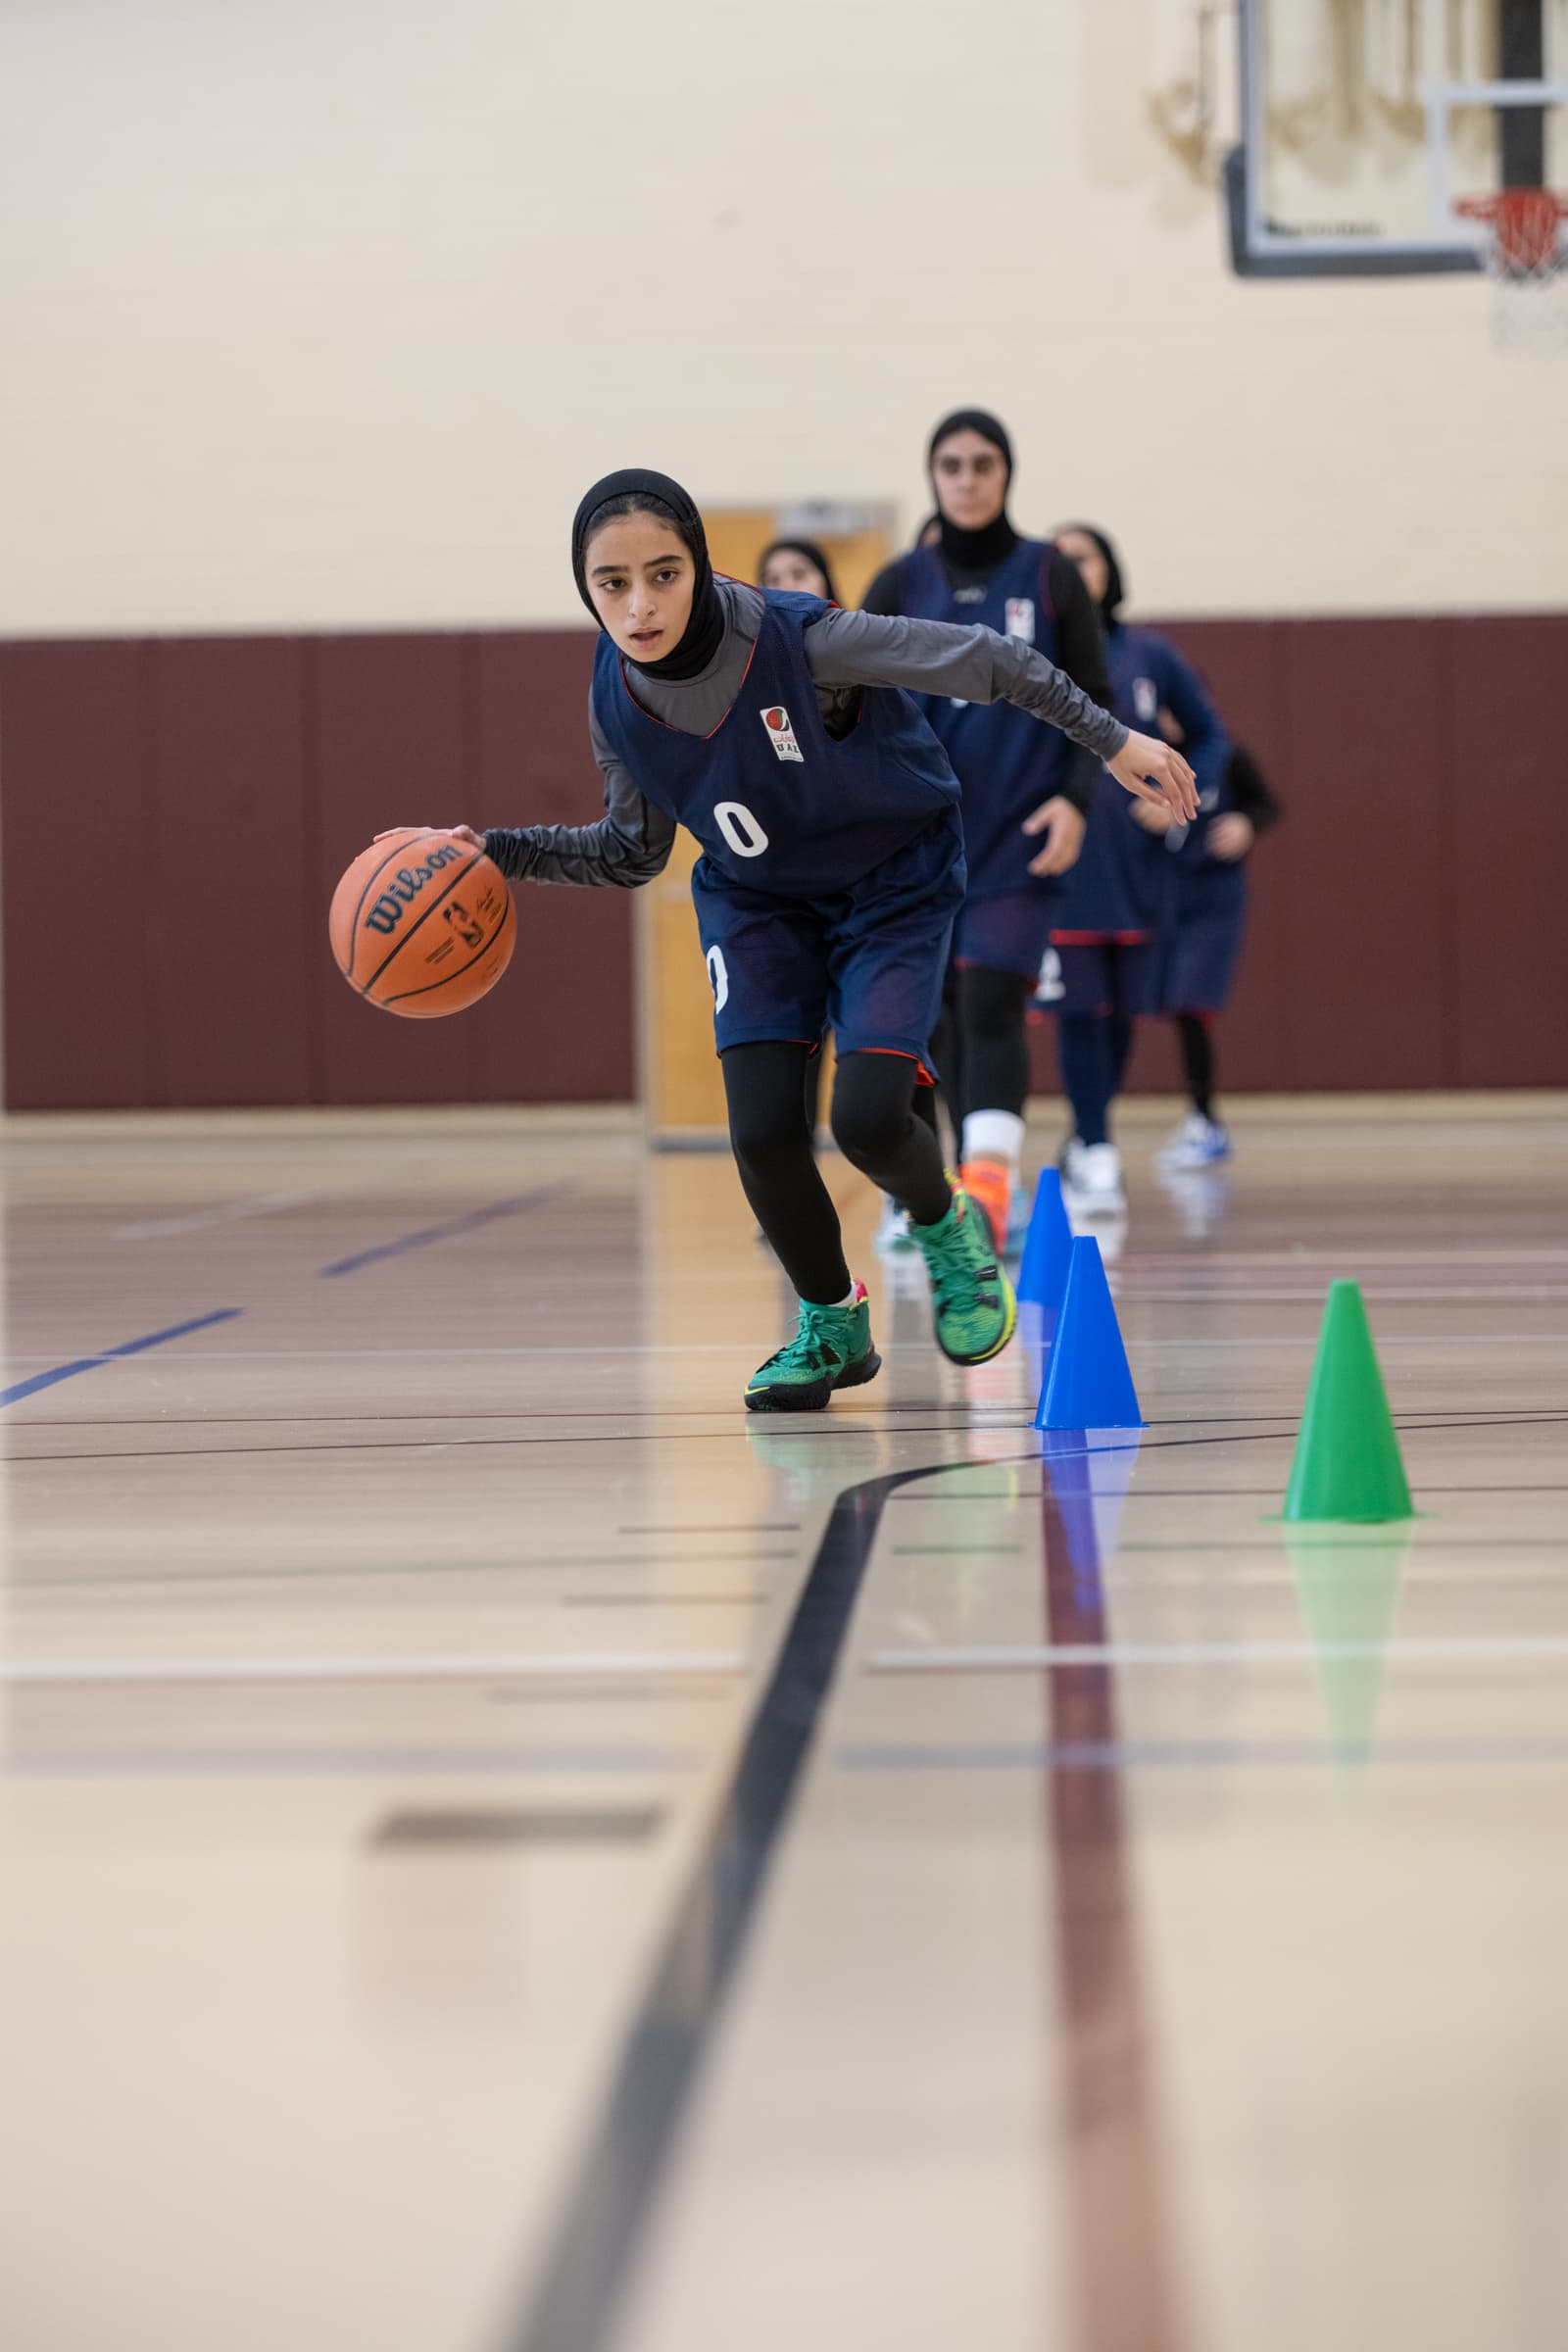 UAE woman basketball player dribbling basketball